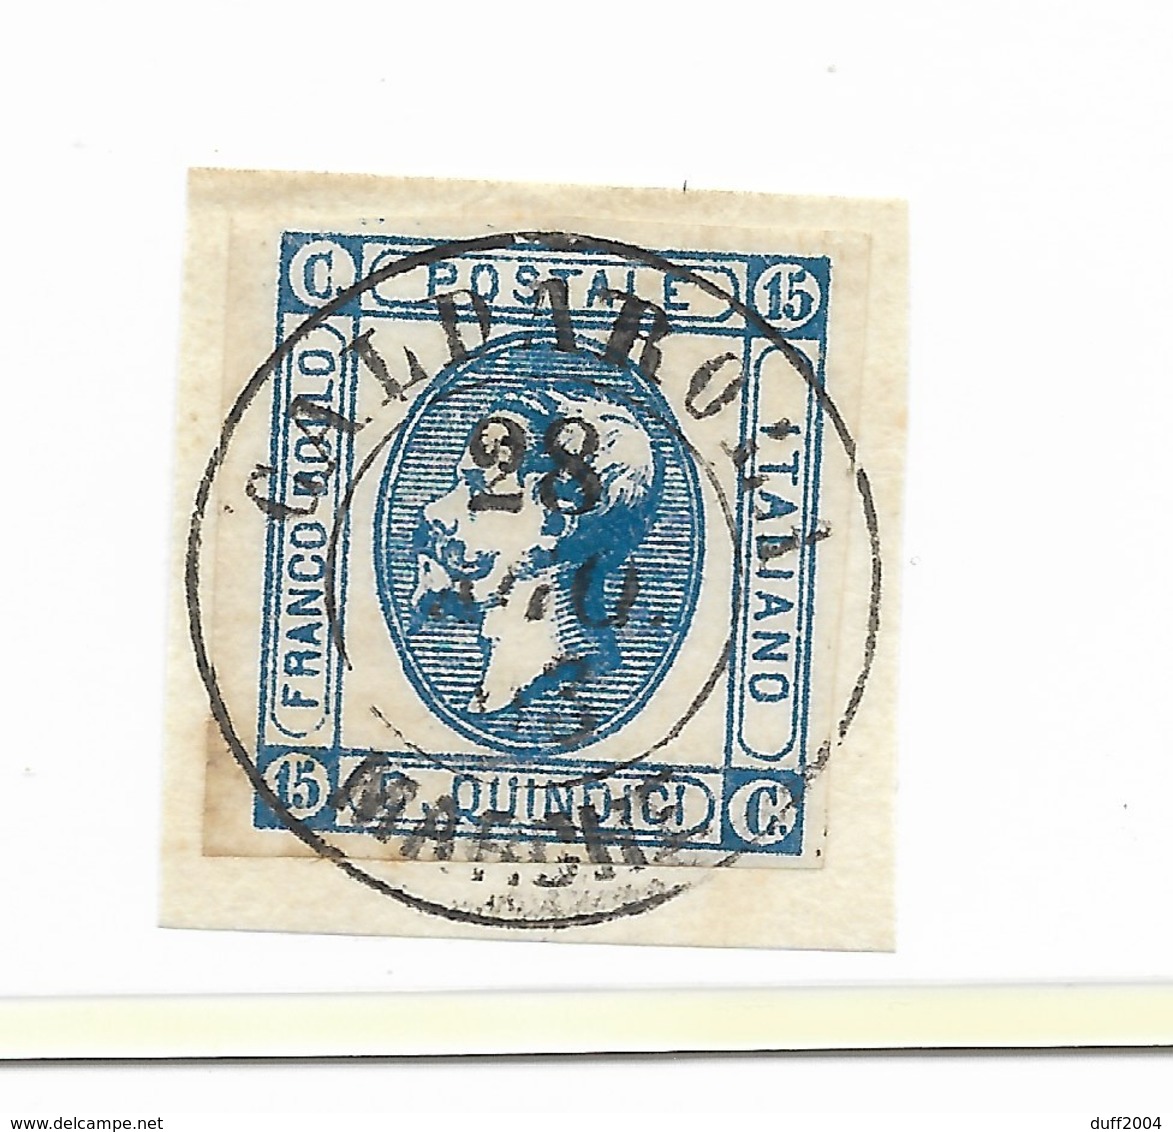 DA CALDAROLA - MARCHE - 28.8.1863 - P.6. - Poststempel